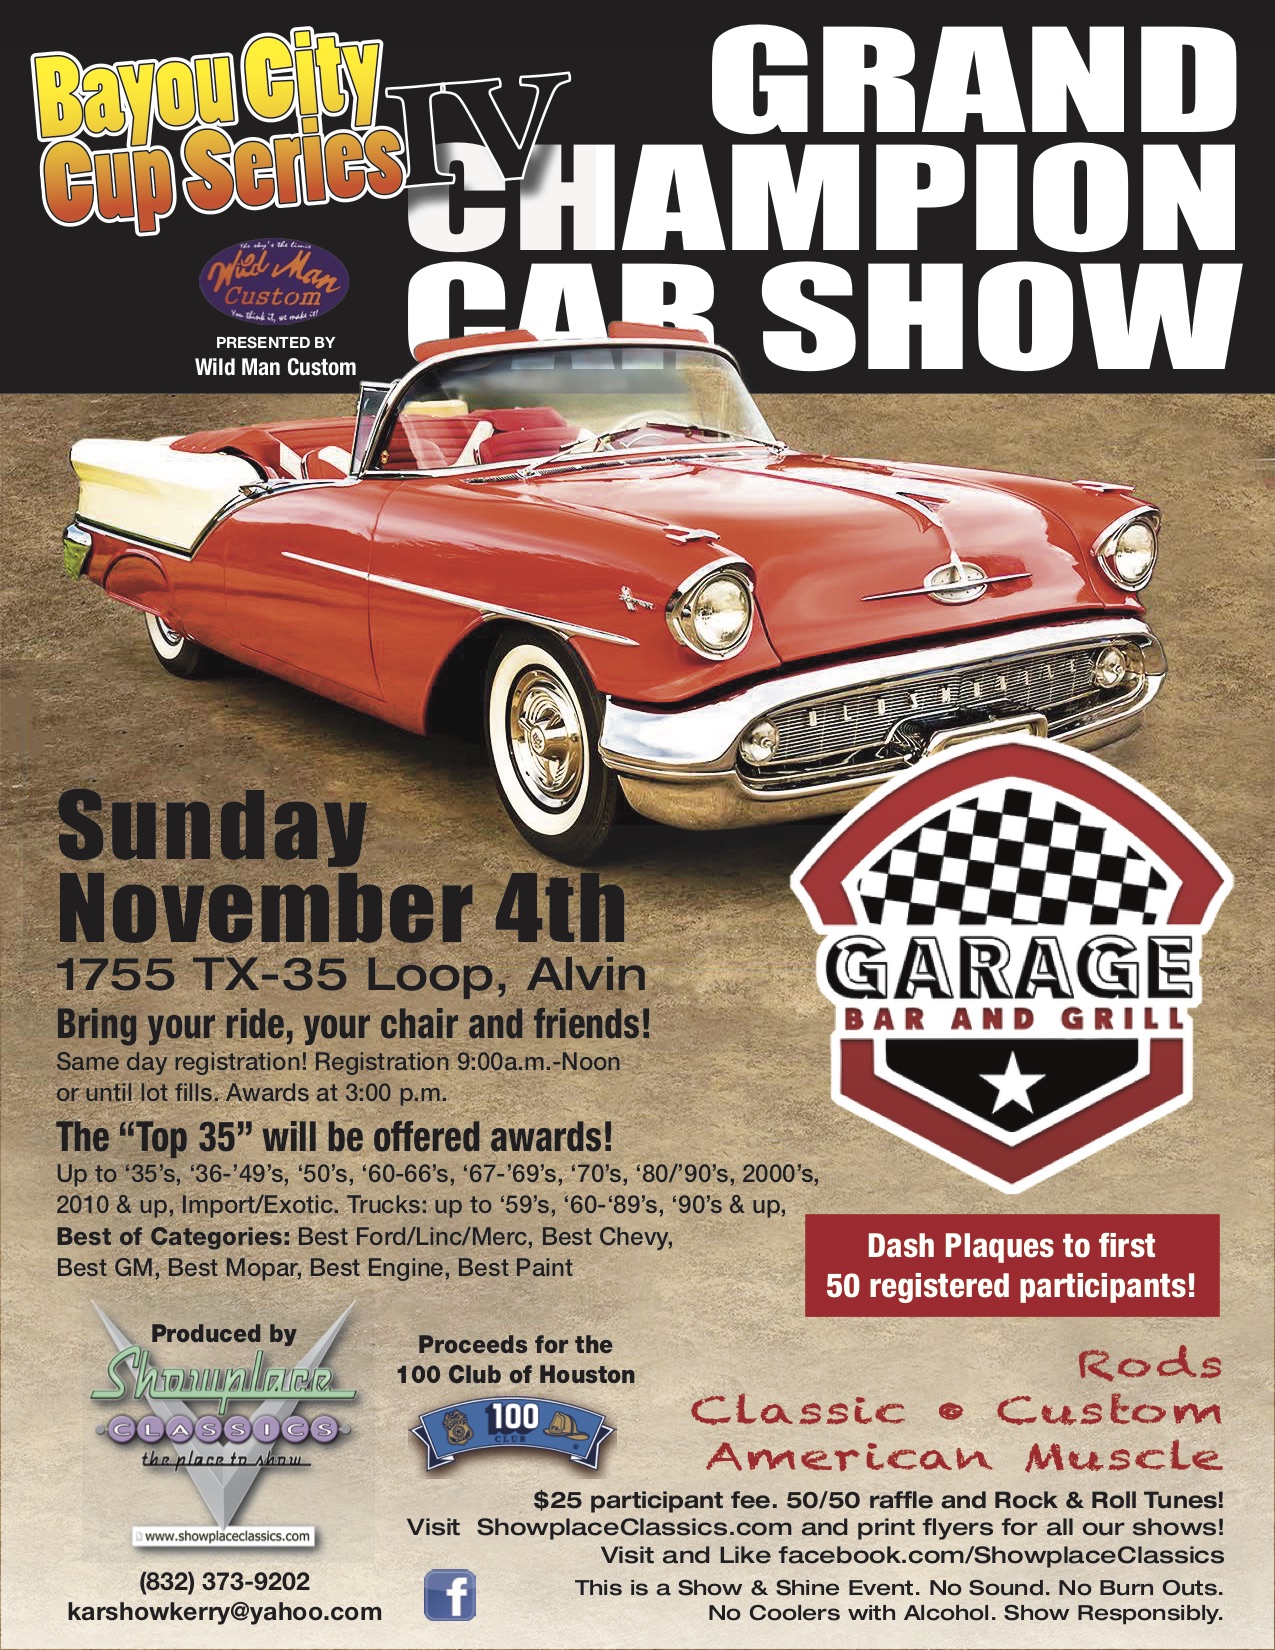 BCCS IV Garage Bar & Grill Grand Champion Show - Car Show Radar